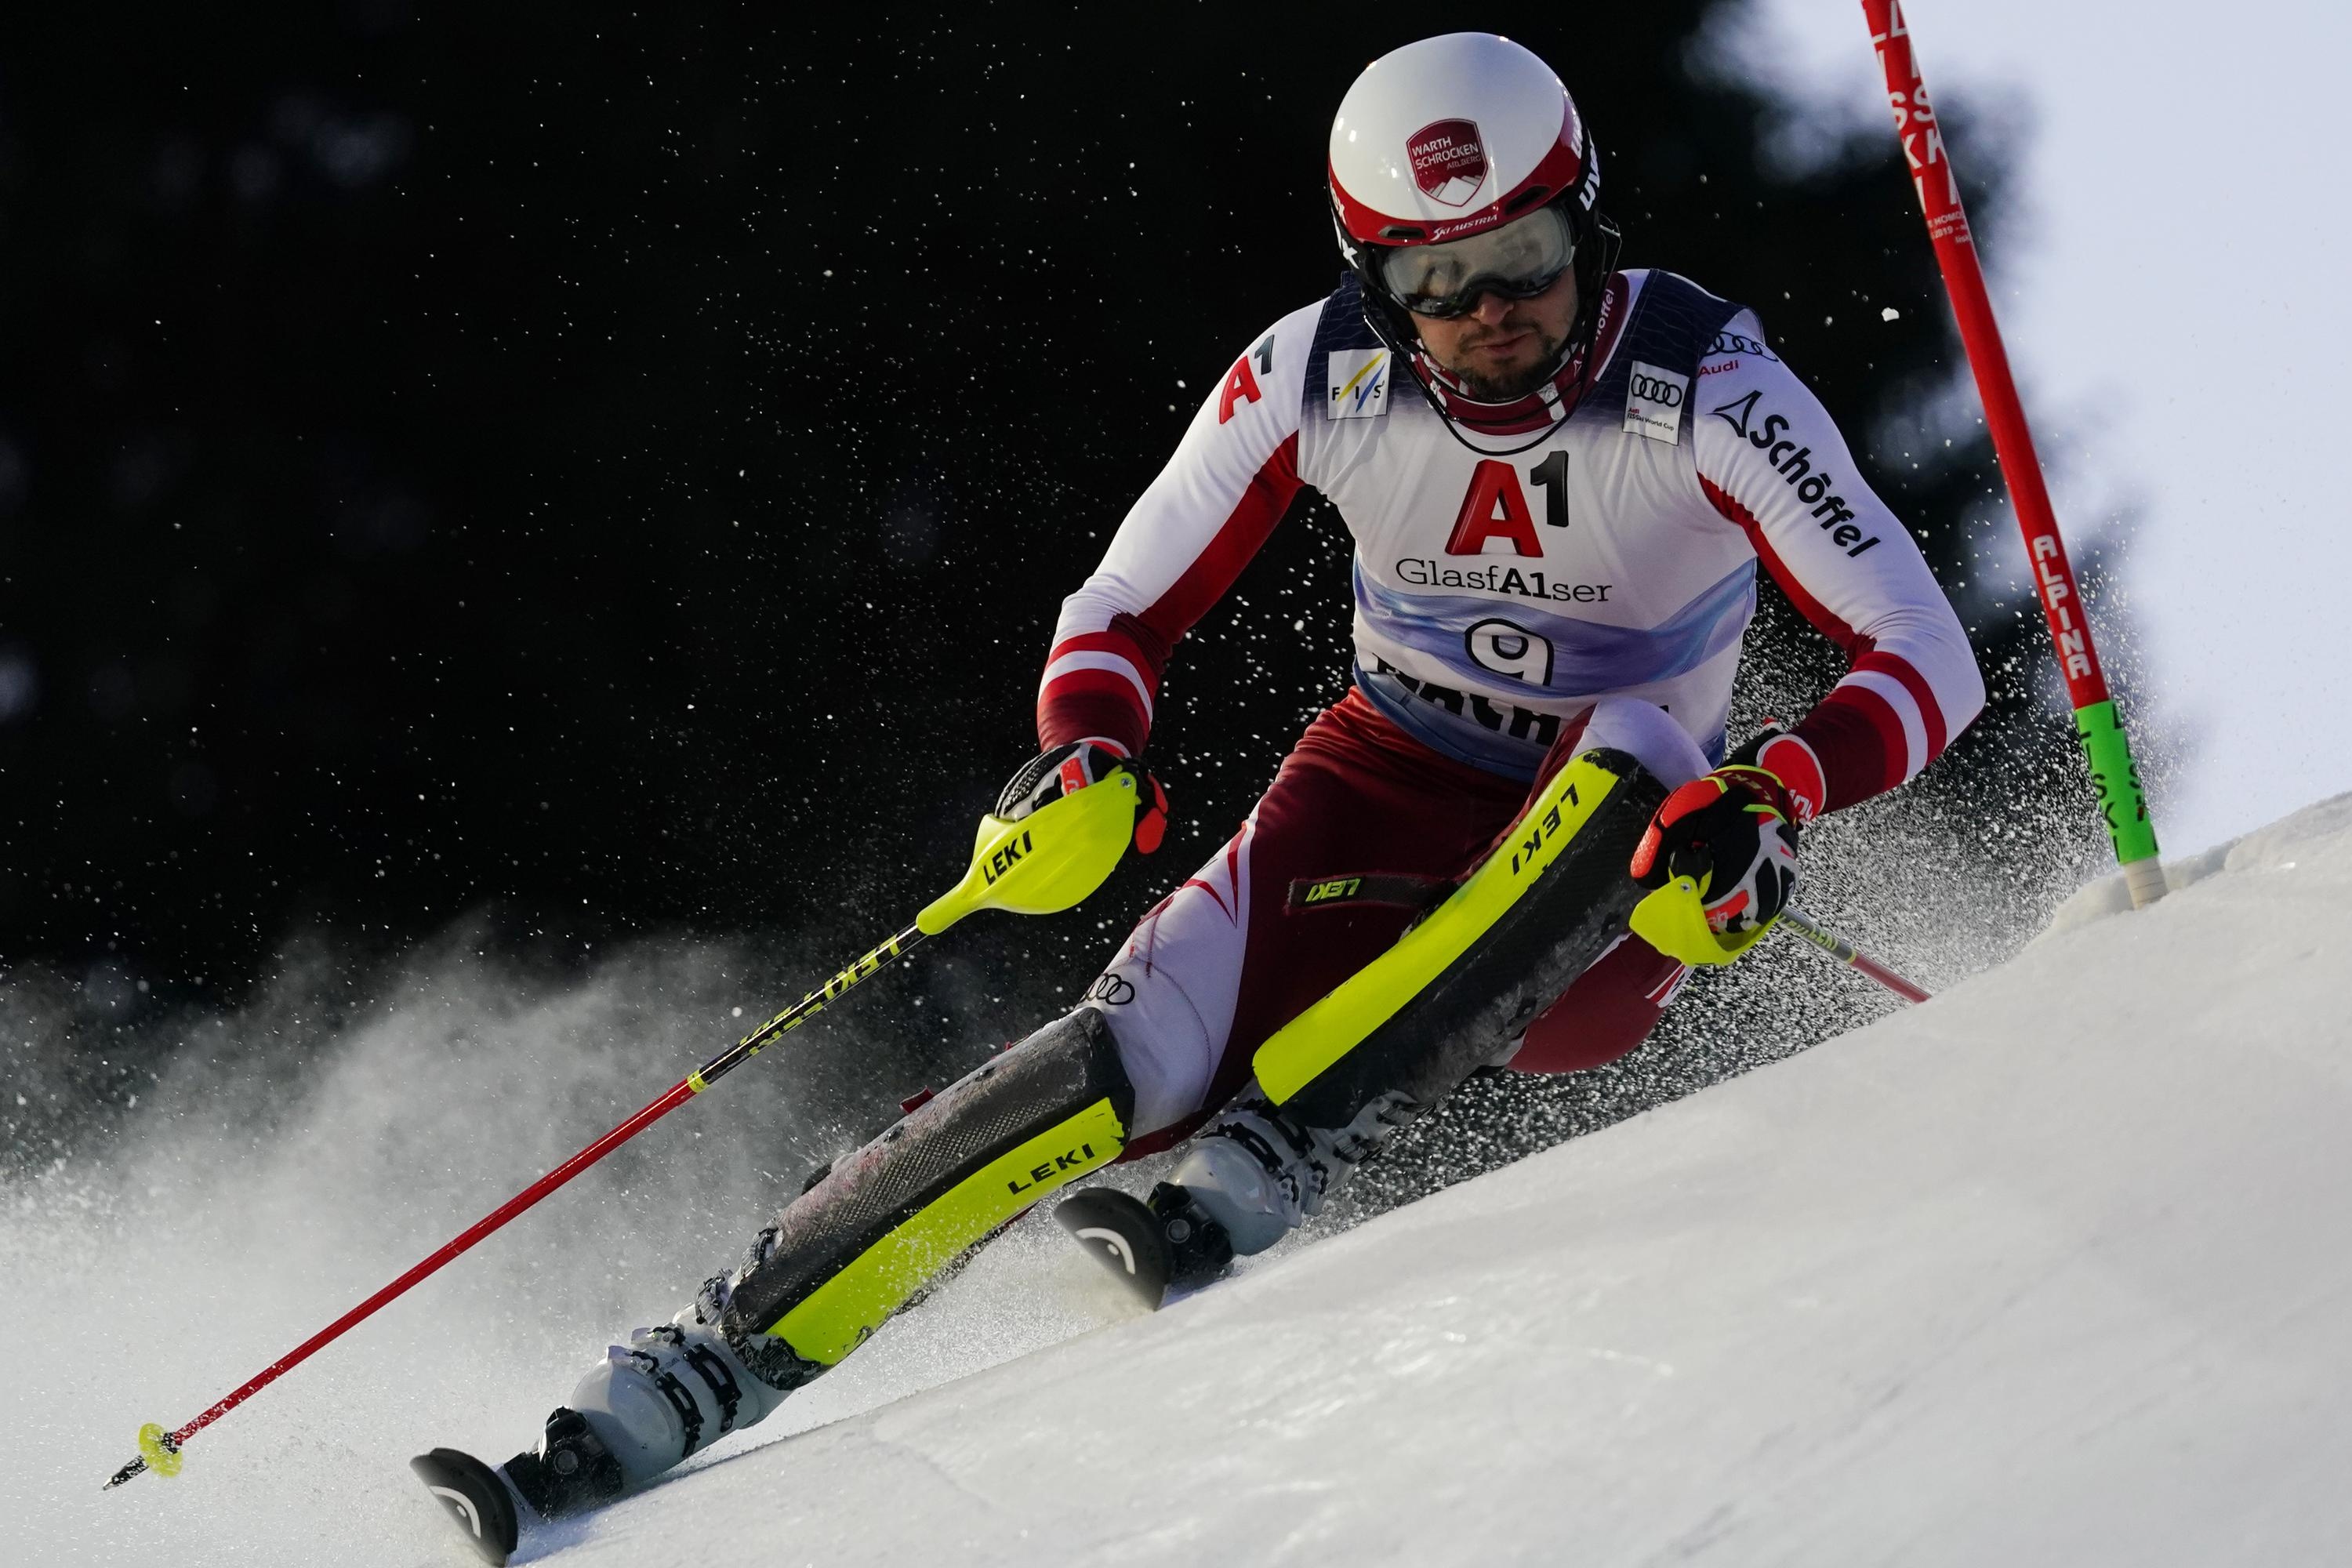 Slalom: Austrian Skier, Johannes Strolz, World Cup Slalom, Cyclic winter sports. 3000x2000 HD Wallpaper.